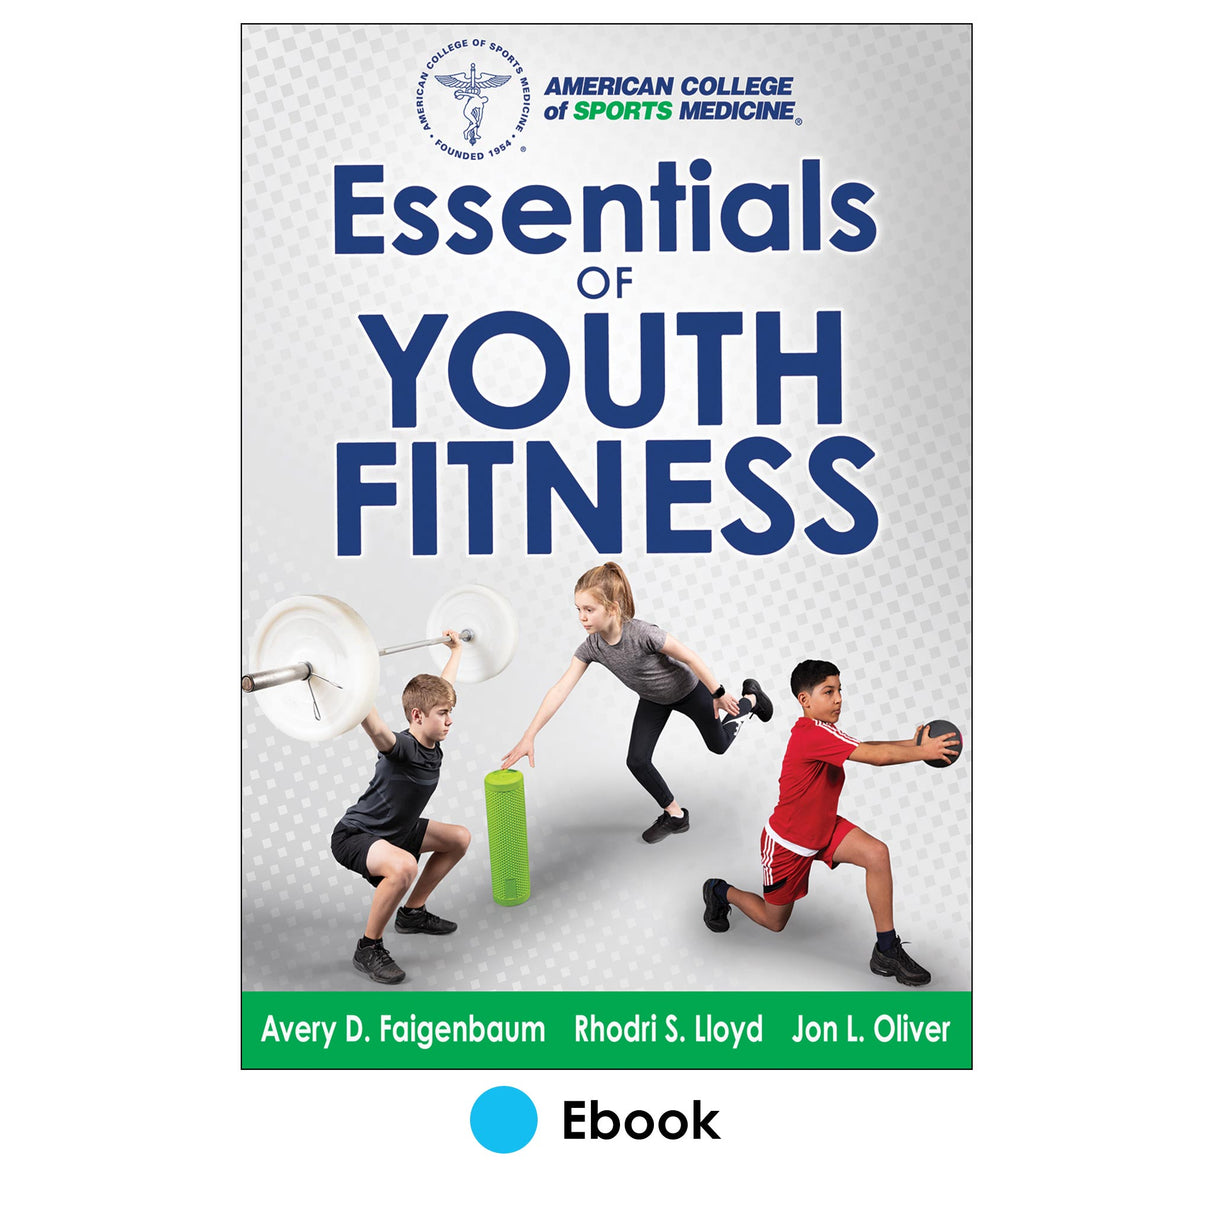 Essentials of Youth Fitness epub